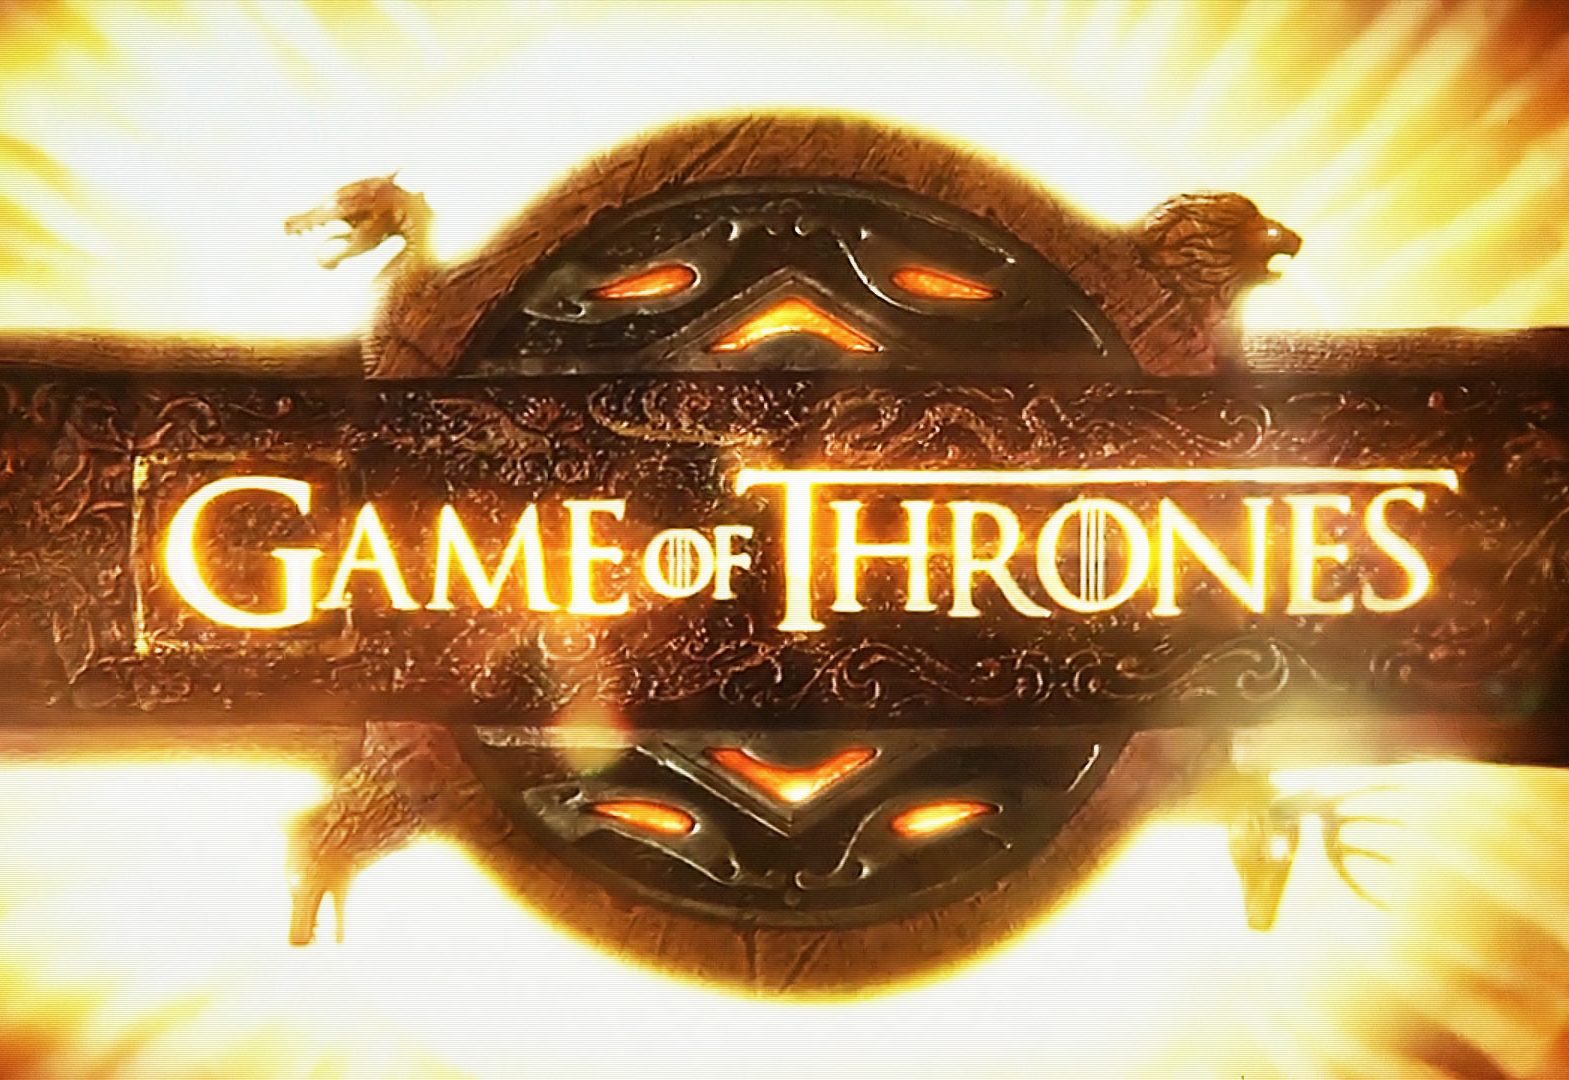 Confirma HBO para abril próximo última temporada de “Game of thrones” 